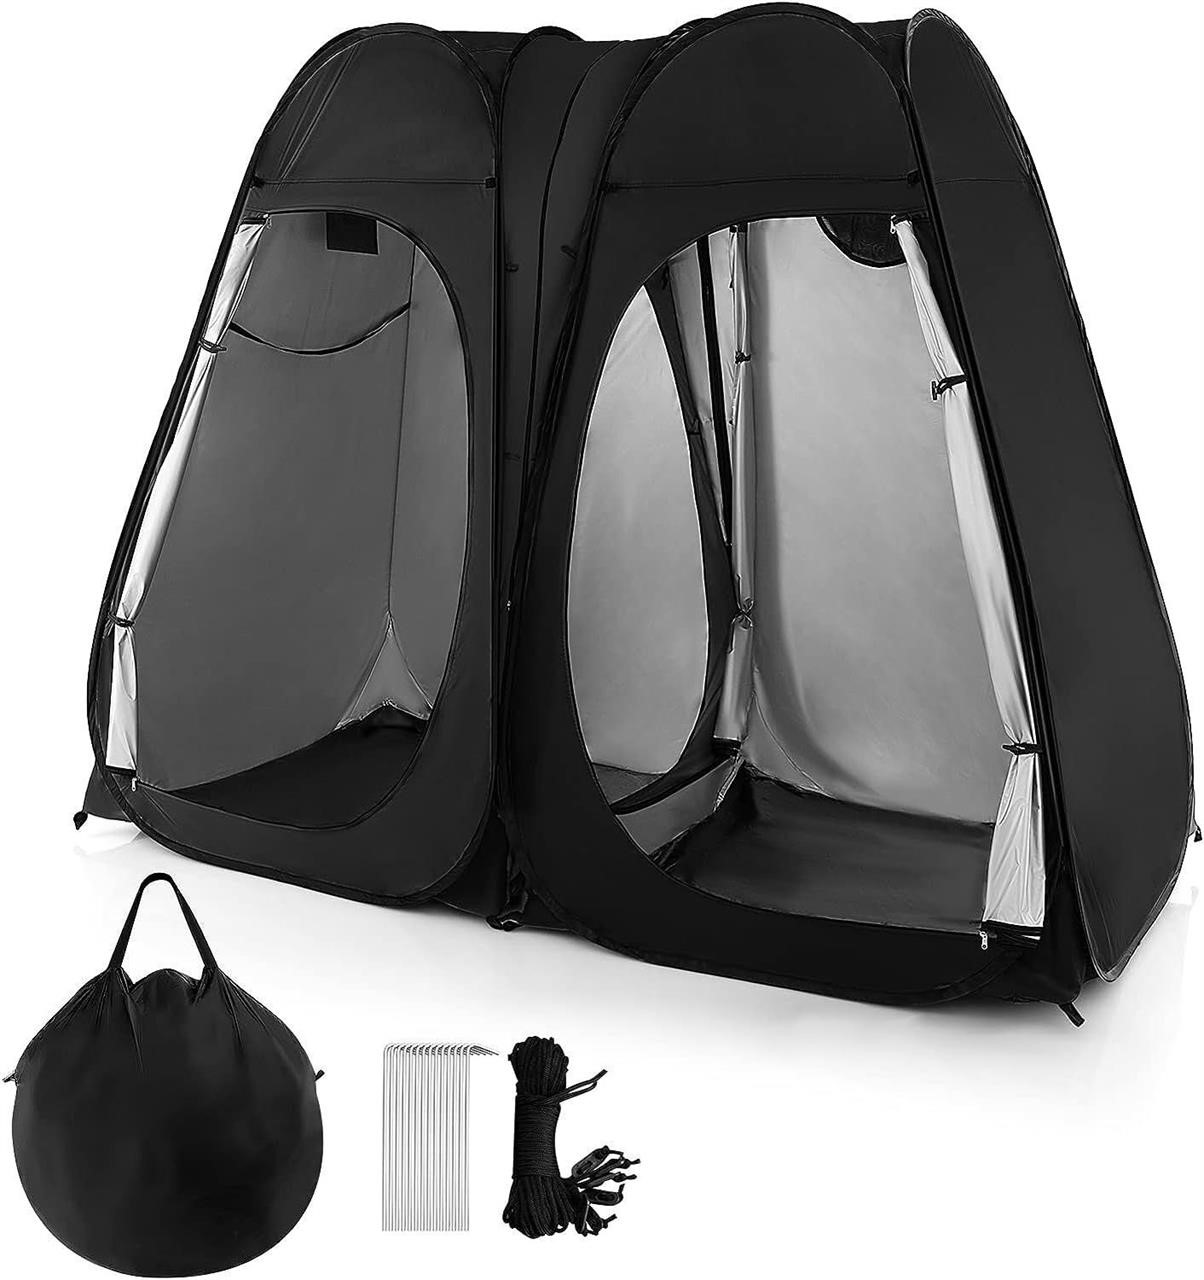 Goplus 2 Room Pop Up Shower Tent, 7.5FT